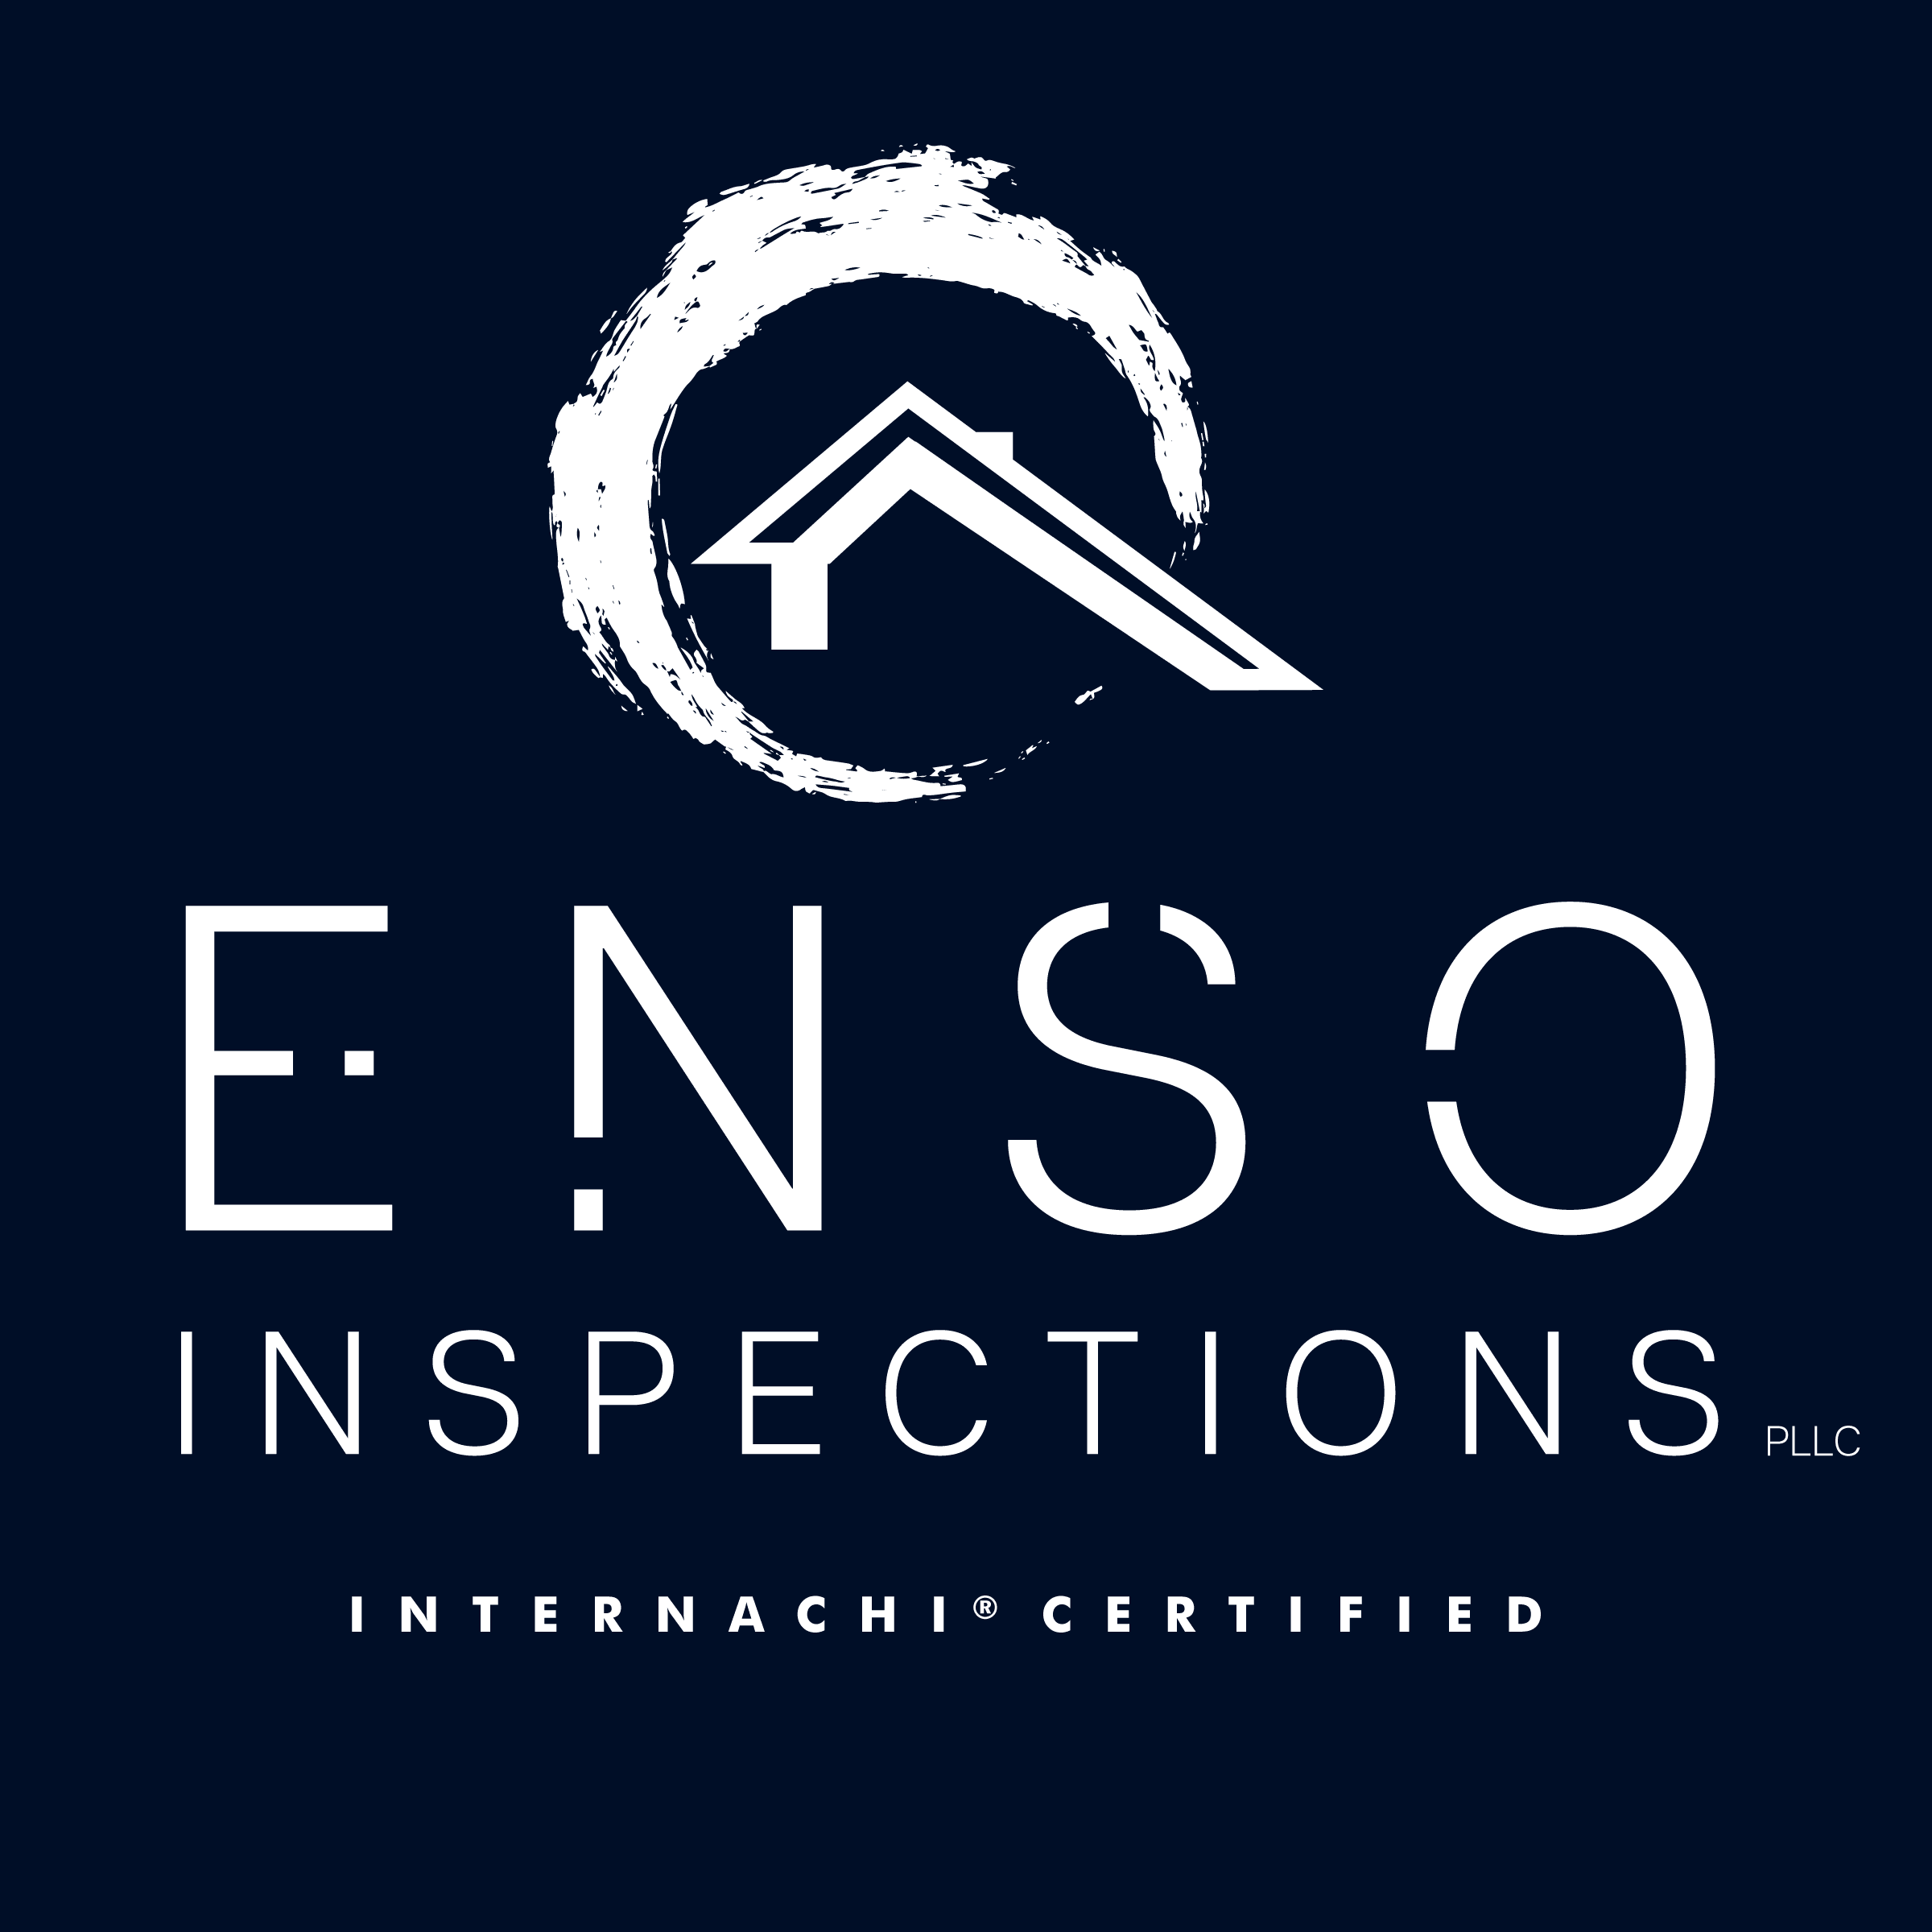 Enso Inspections PLLC Logo